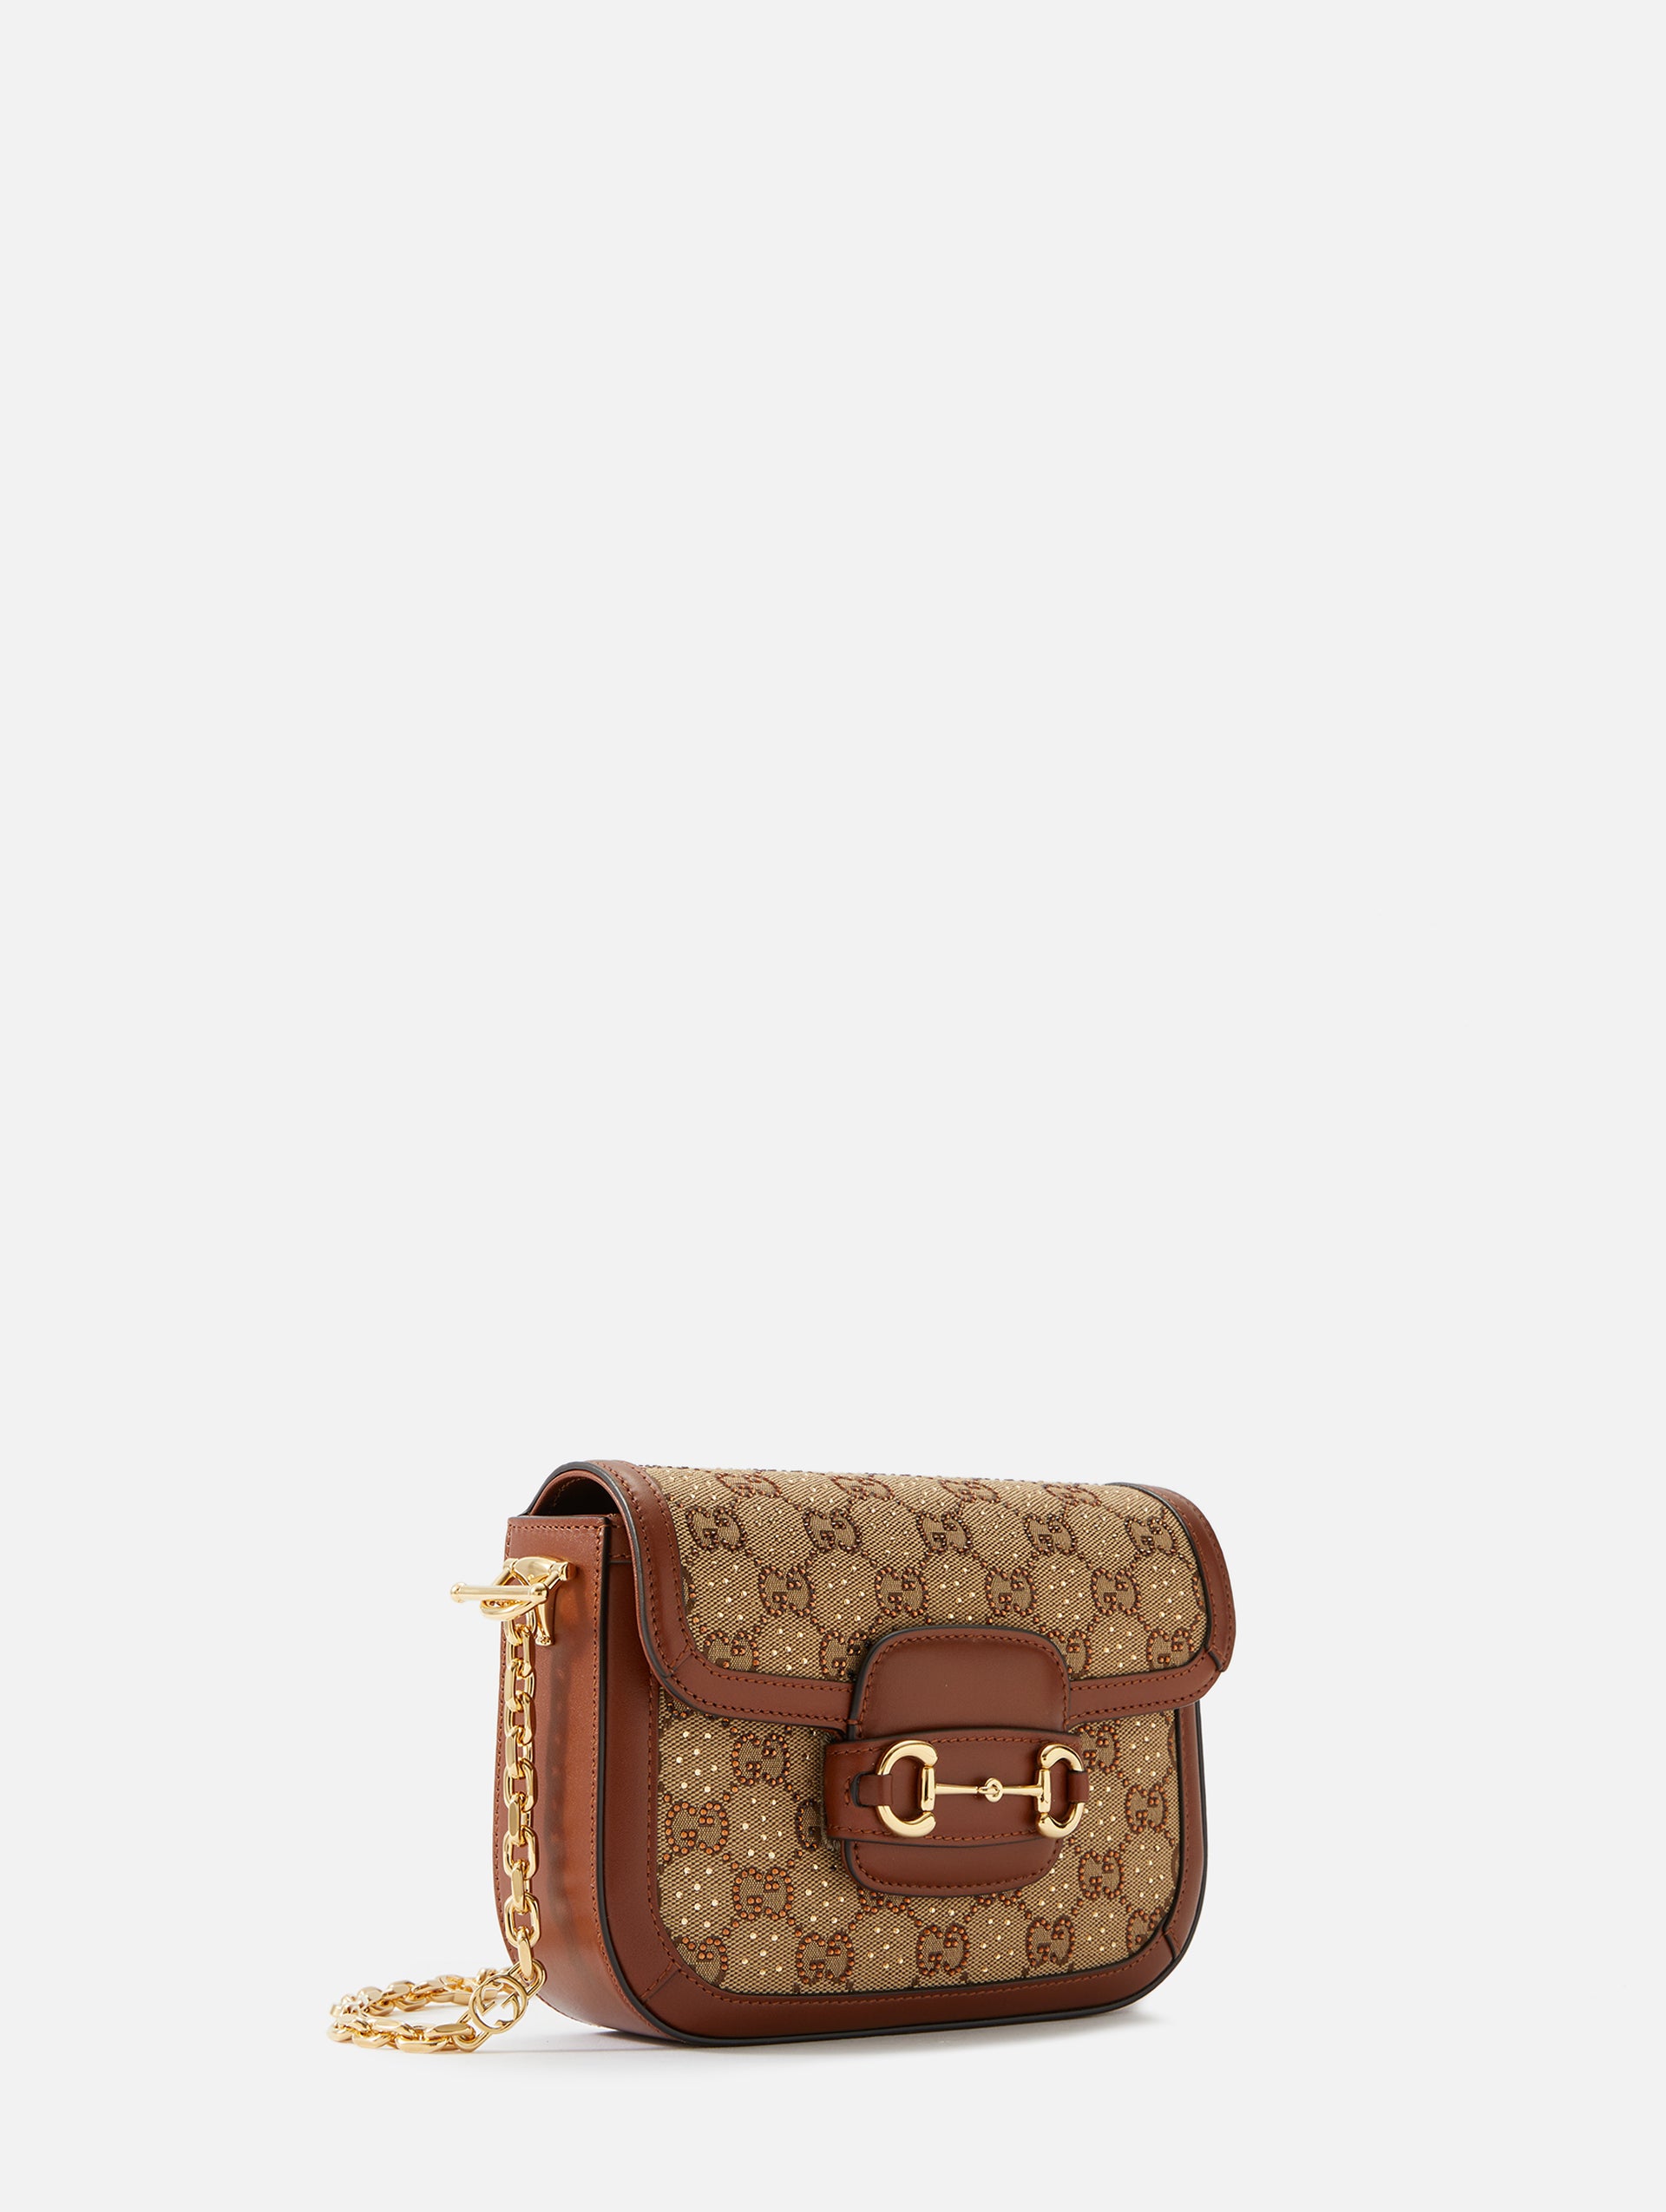 Gucci's 1955 Horsebit Bag Is the Latest Designer It Bag